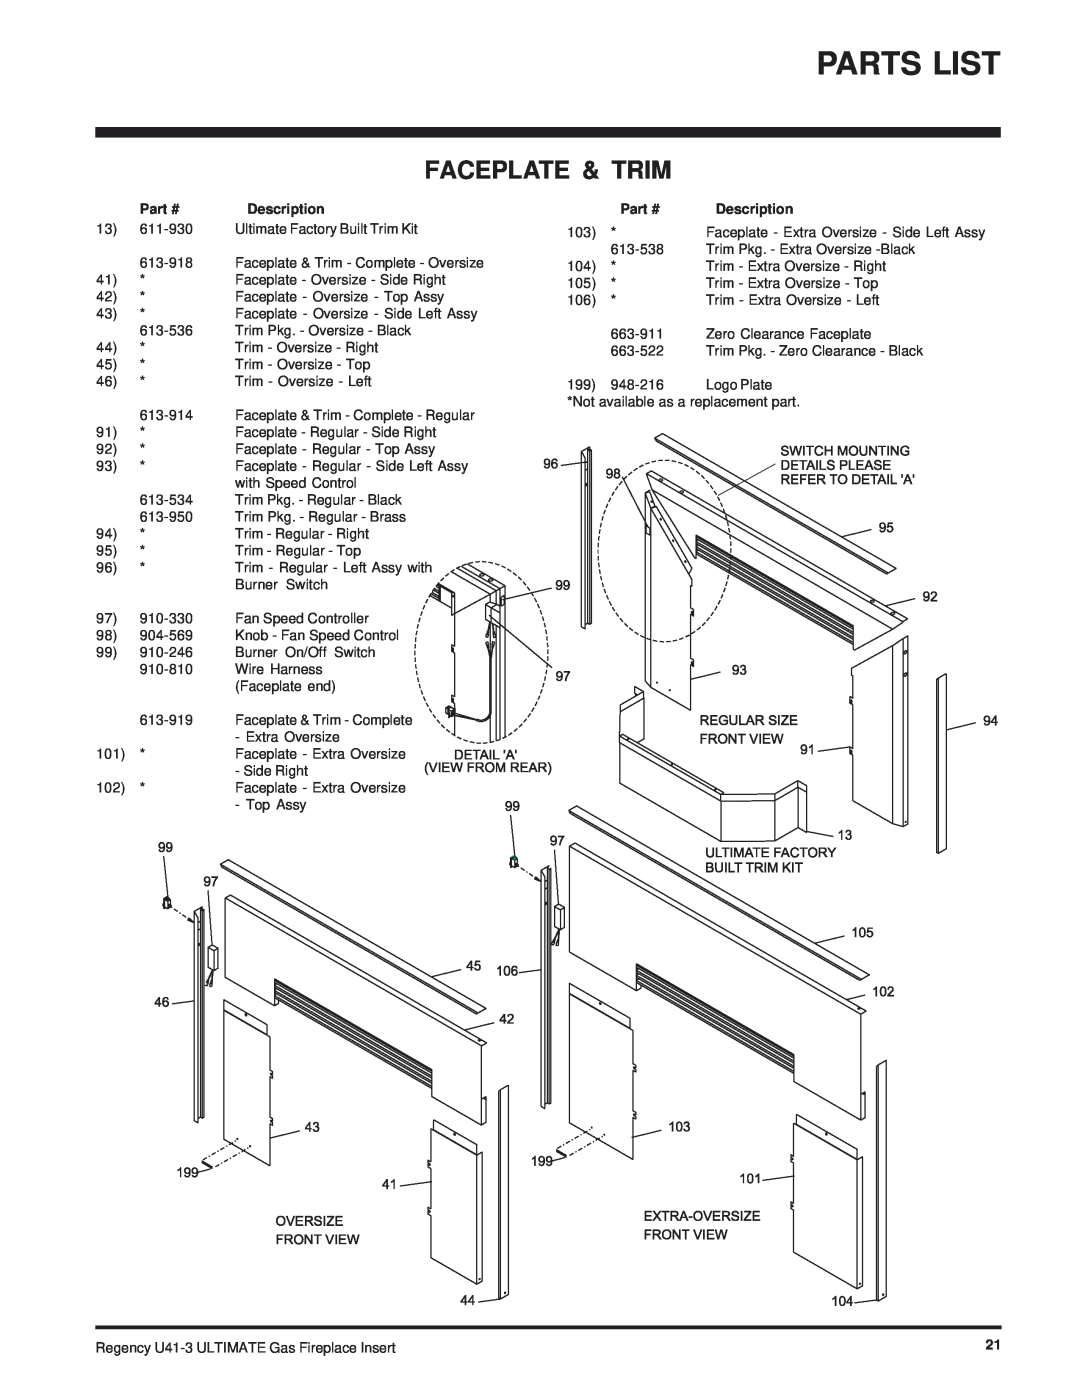 Regency U41-LP3, U41-NG3 installation manual Faceplate & Trim, Part #, Description 